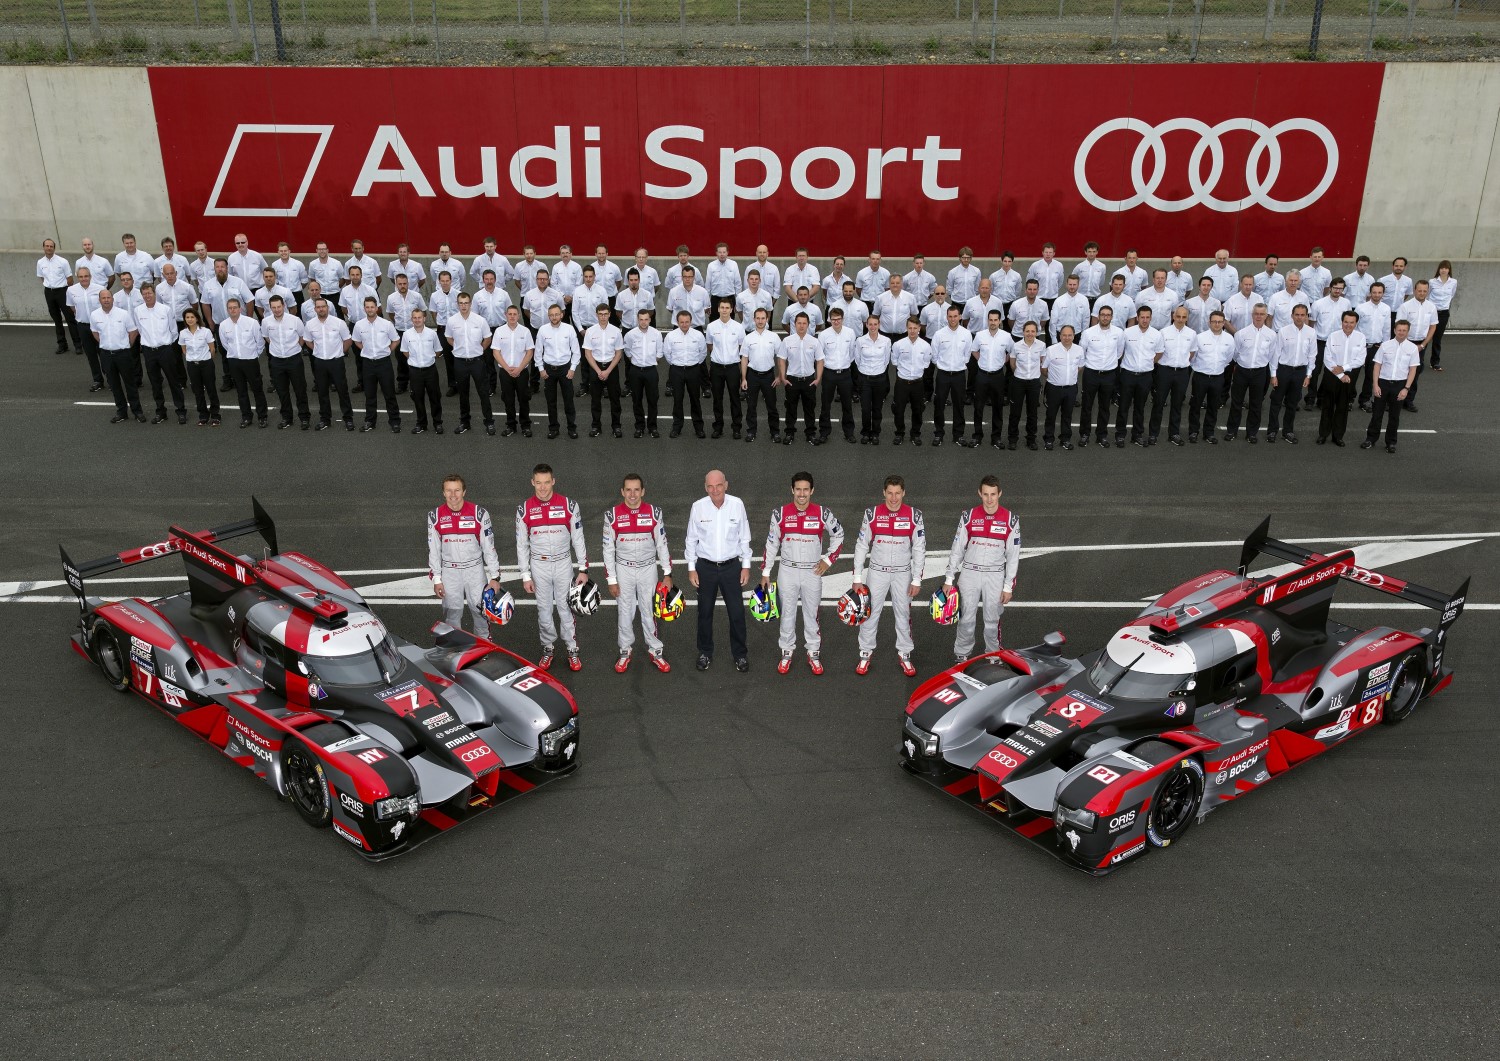 Audi team